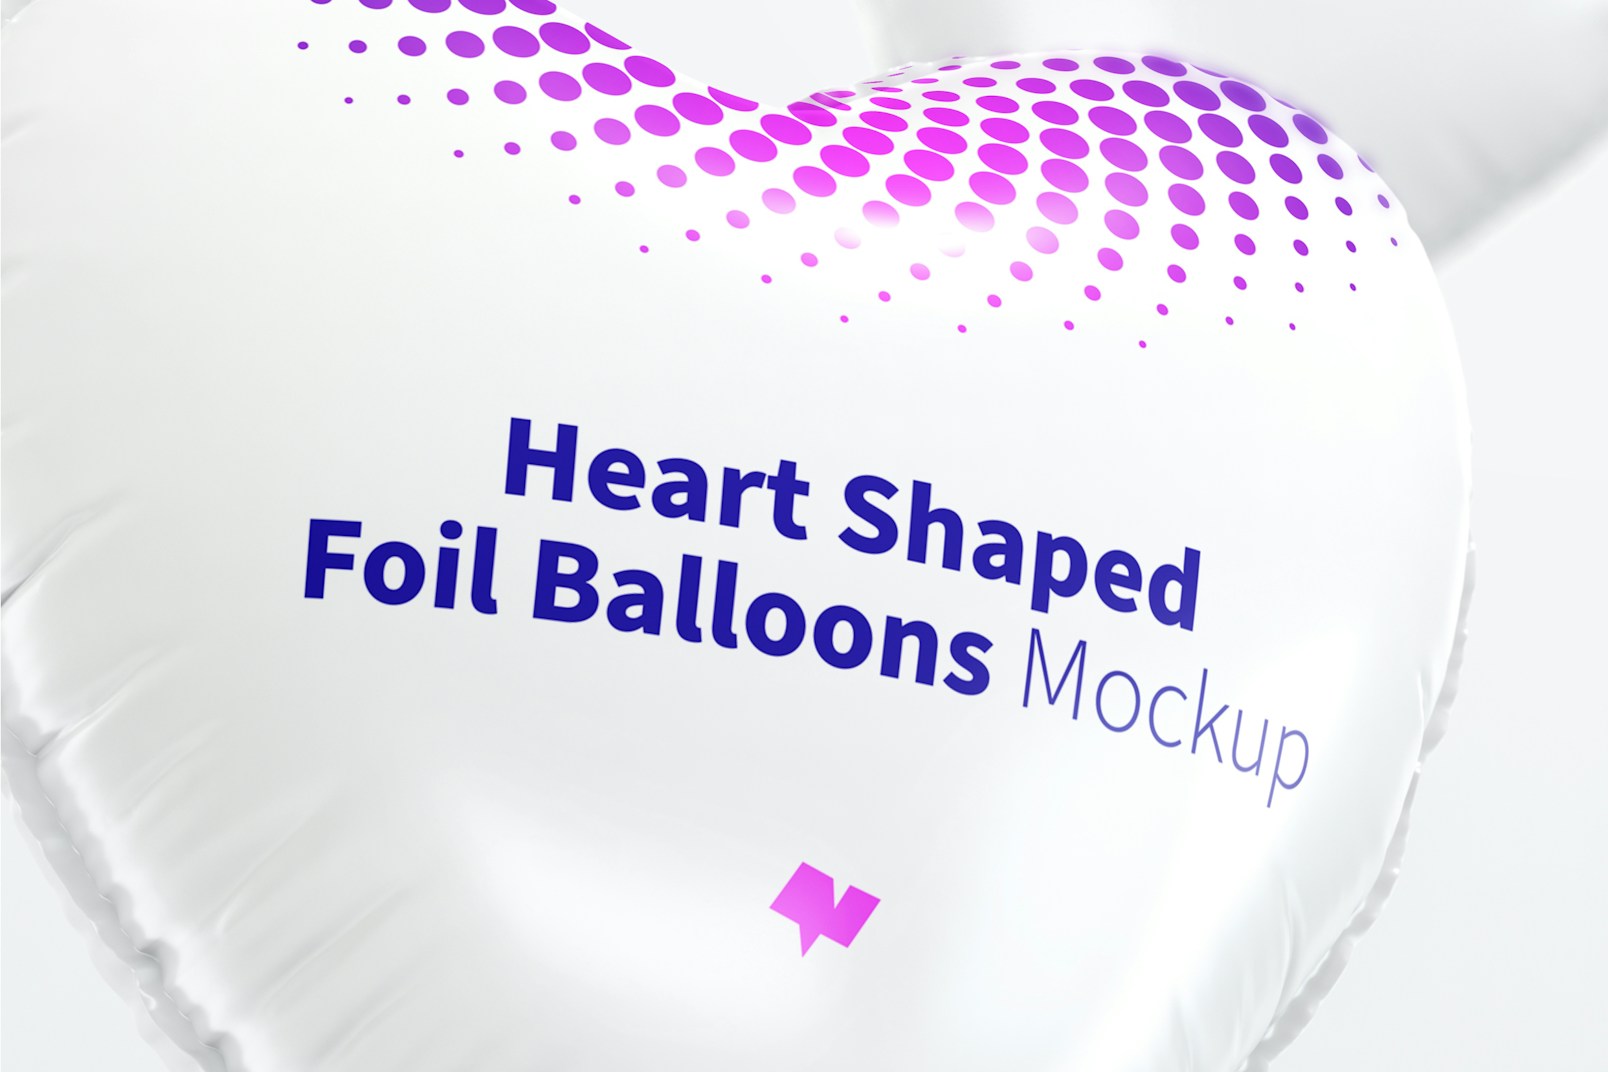 Heart Shaped Foil Balloons Mockup, Close Up